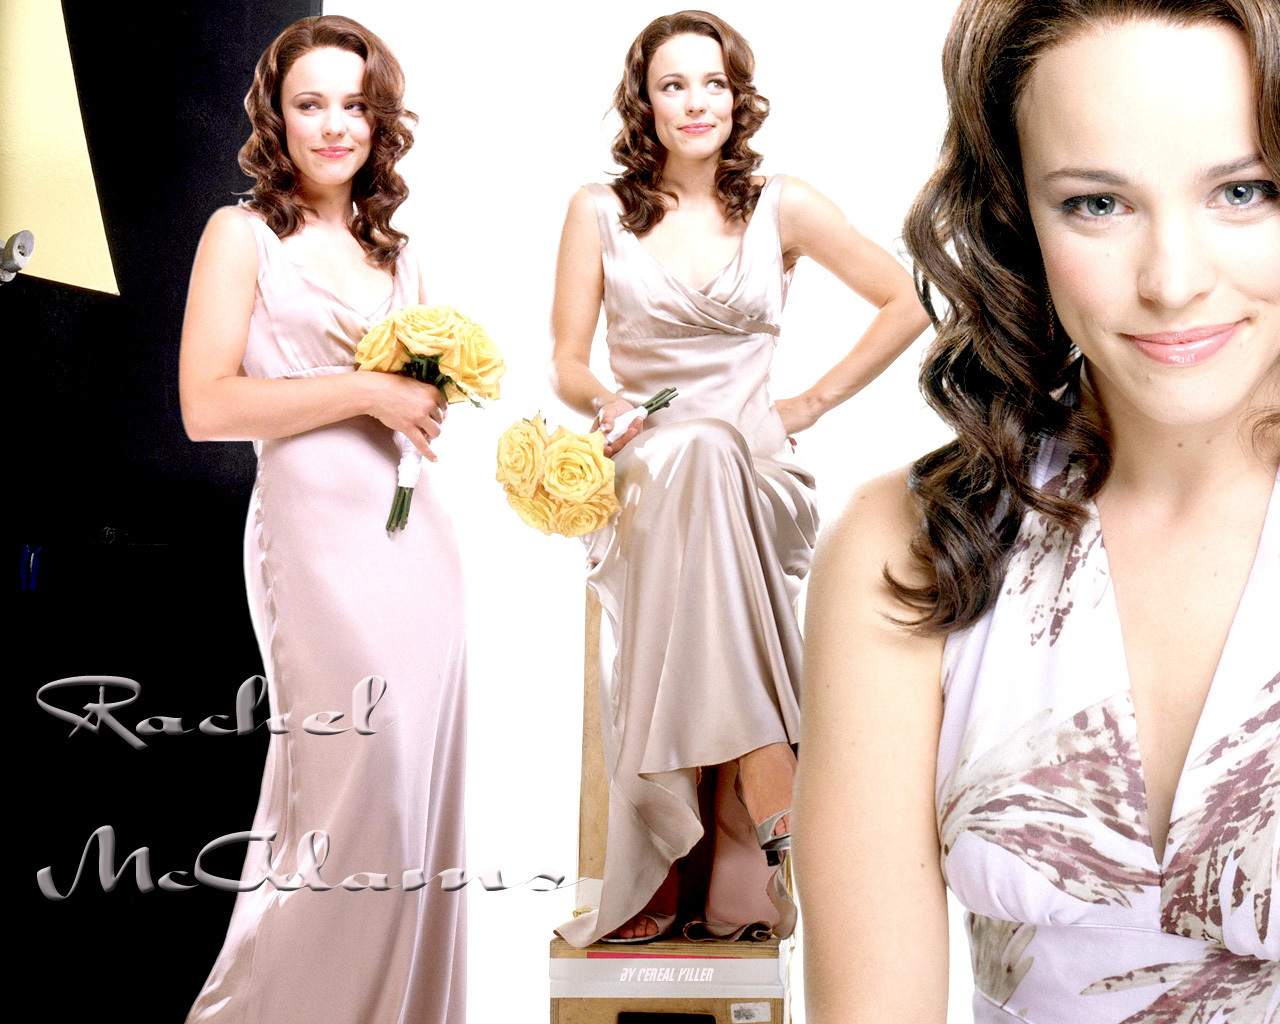 RachelMcadams-celebrity-wallpapers-10508886-1280-1024